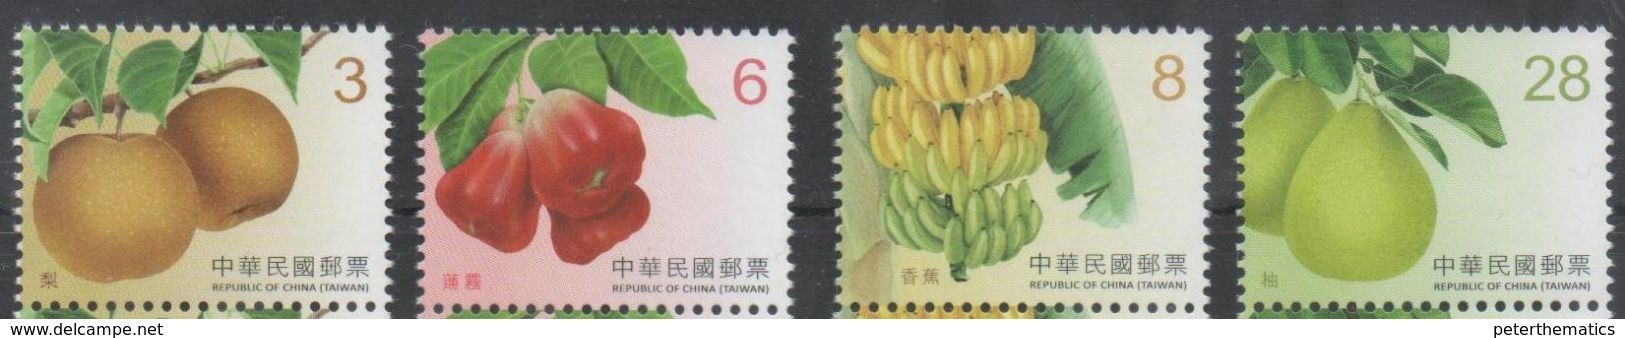 TAIWAN, 2017, MNH, FRUIT , PART II, BANANAS, PEARS, APPLES, 4v - Fruit